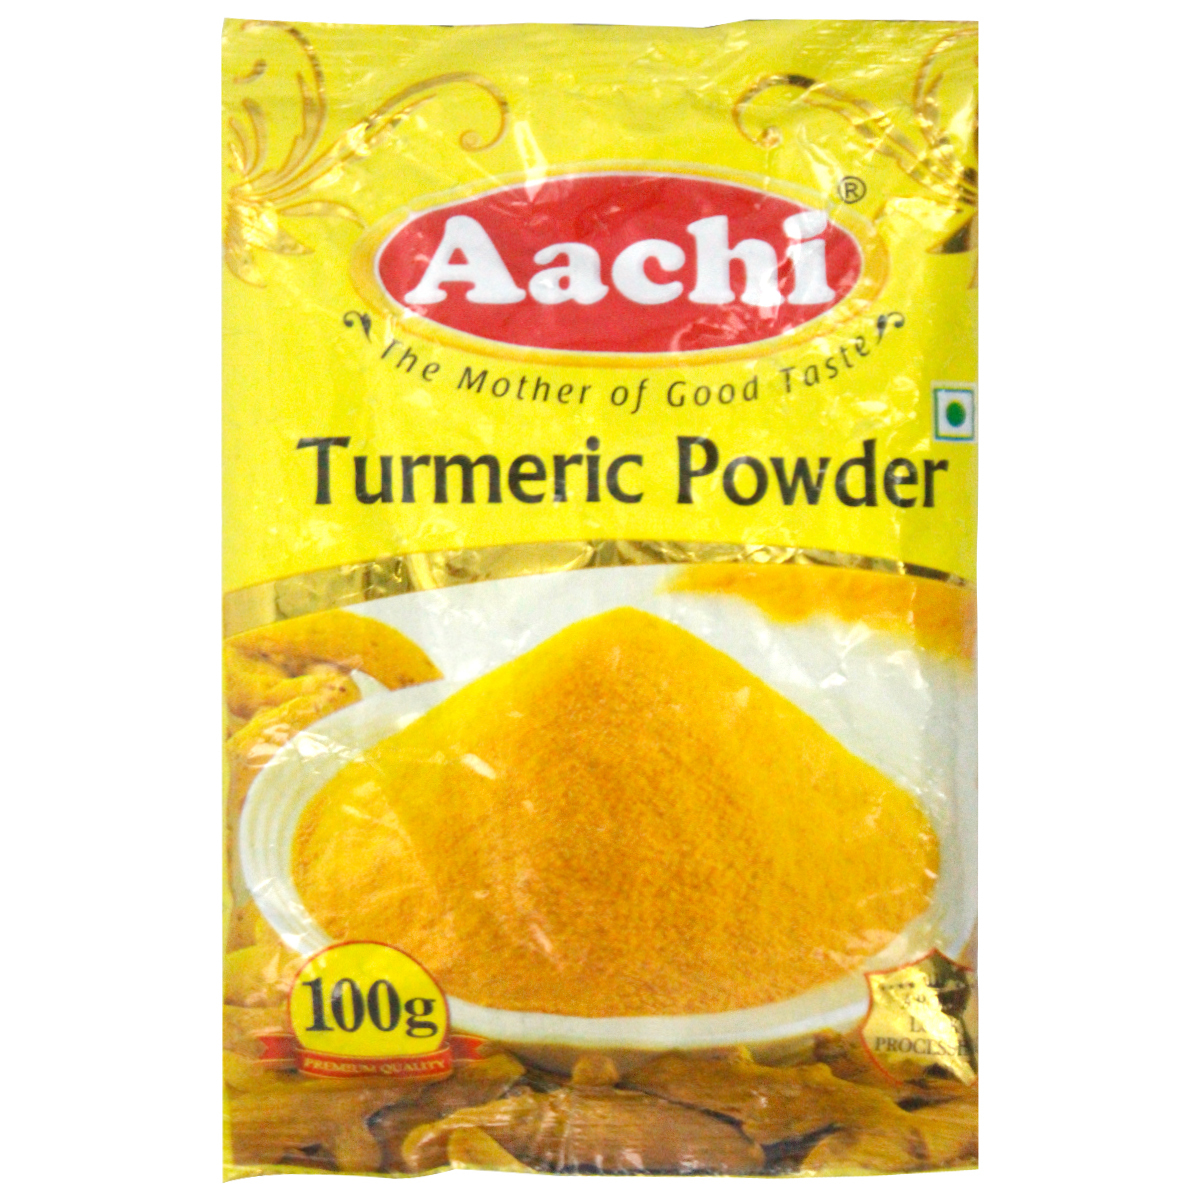 Aachi Turmeric Powder 100g